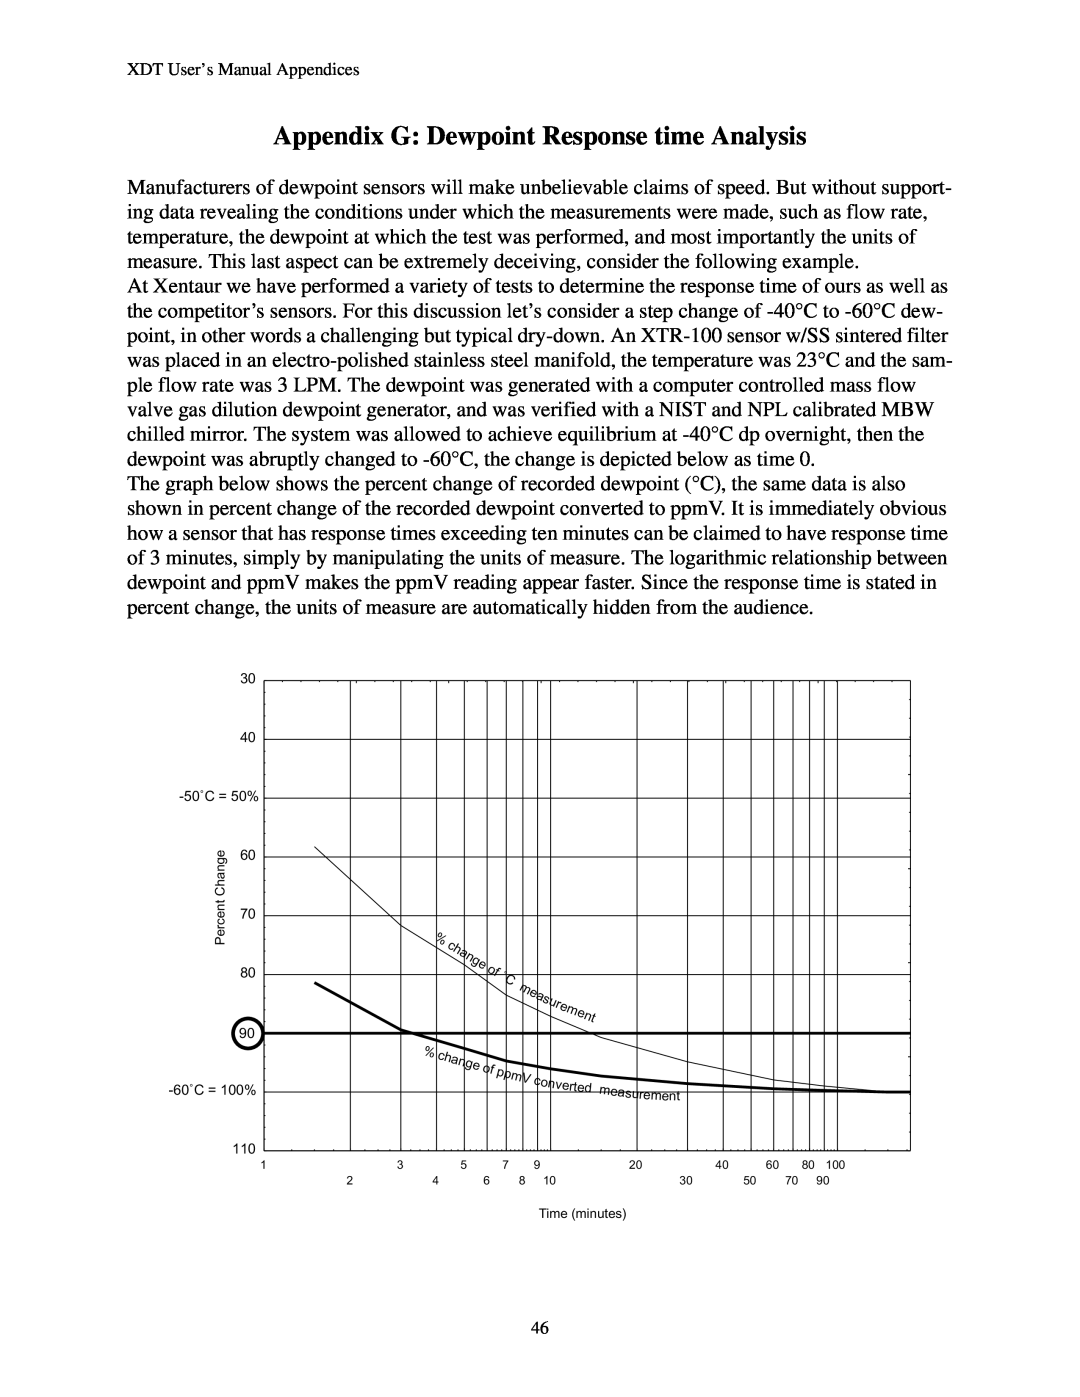 Epson XDT manual Appendix G Dewpoint Response time Analysis 